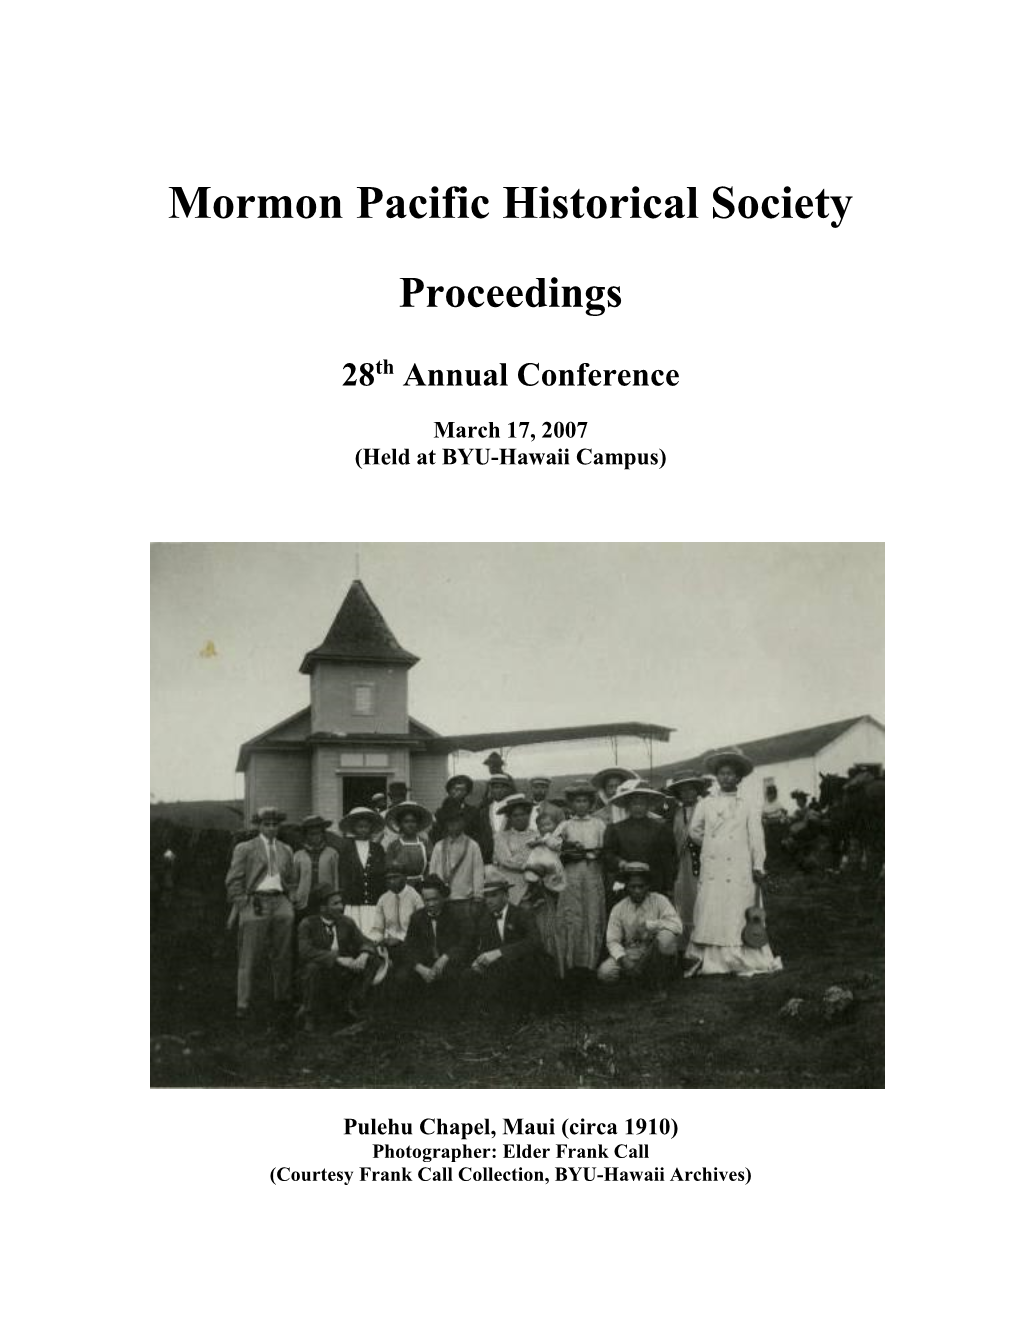 No. 28 Mormon Pacific Historical Society